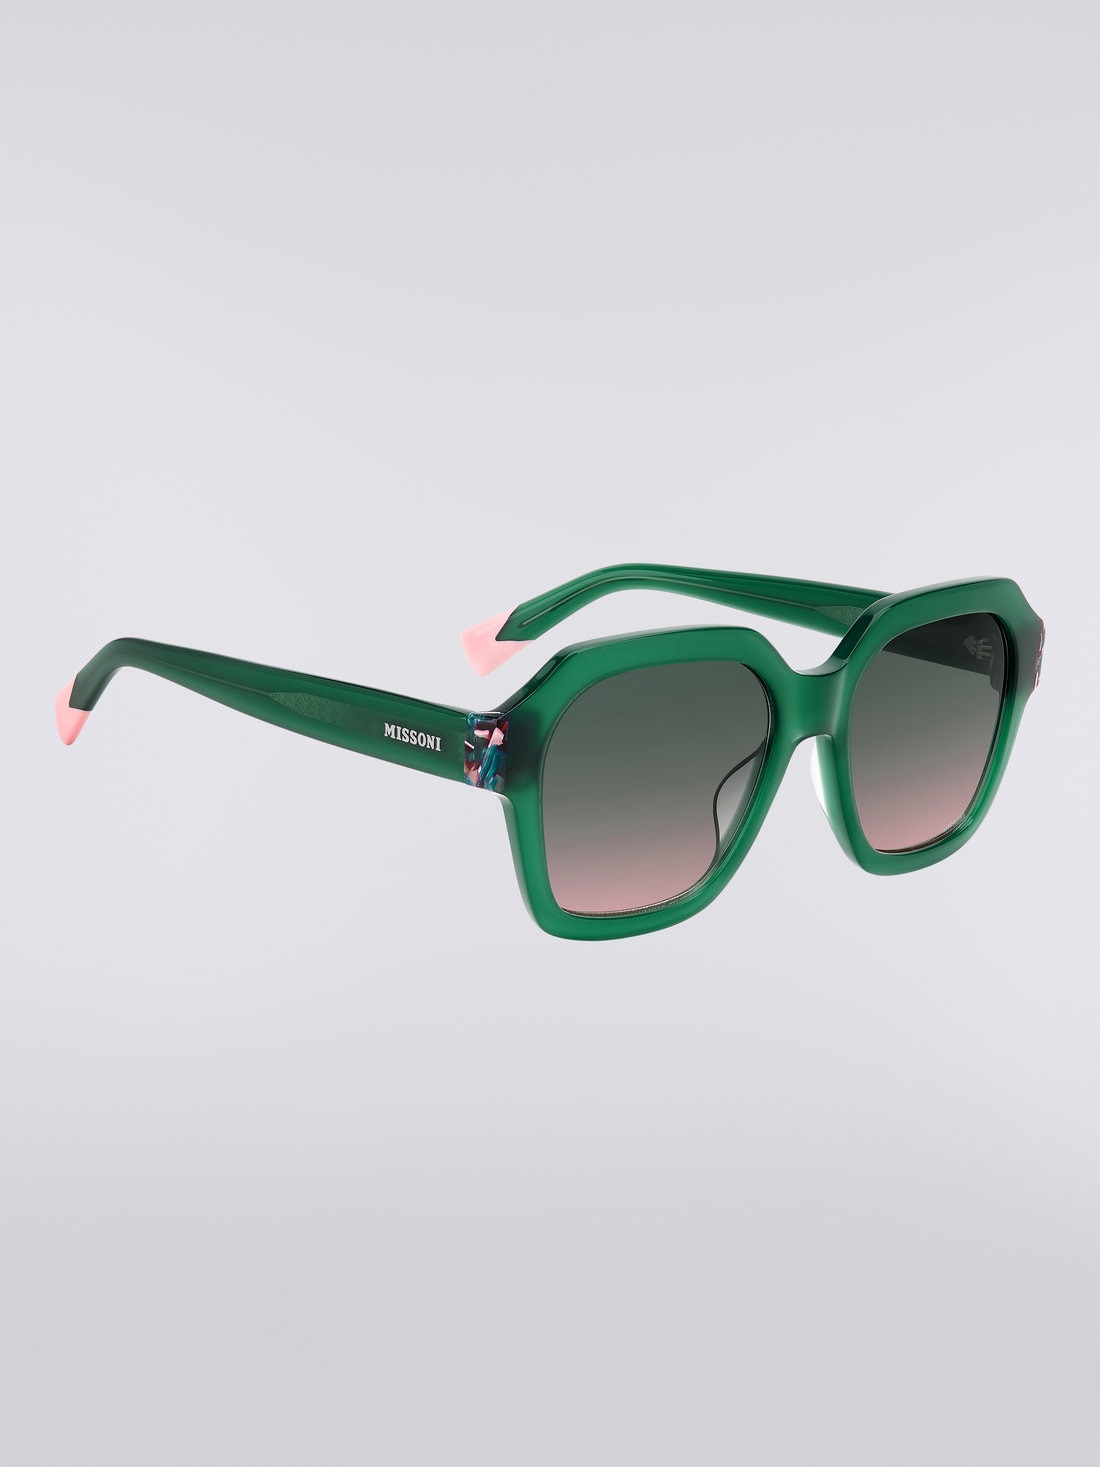 Missoni Seasonal Acetate Sunglasses, Green & Pink - 8051575840159 - 2